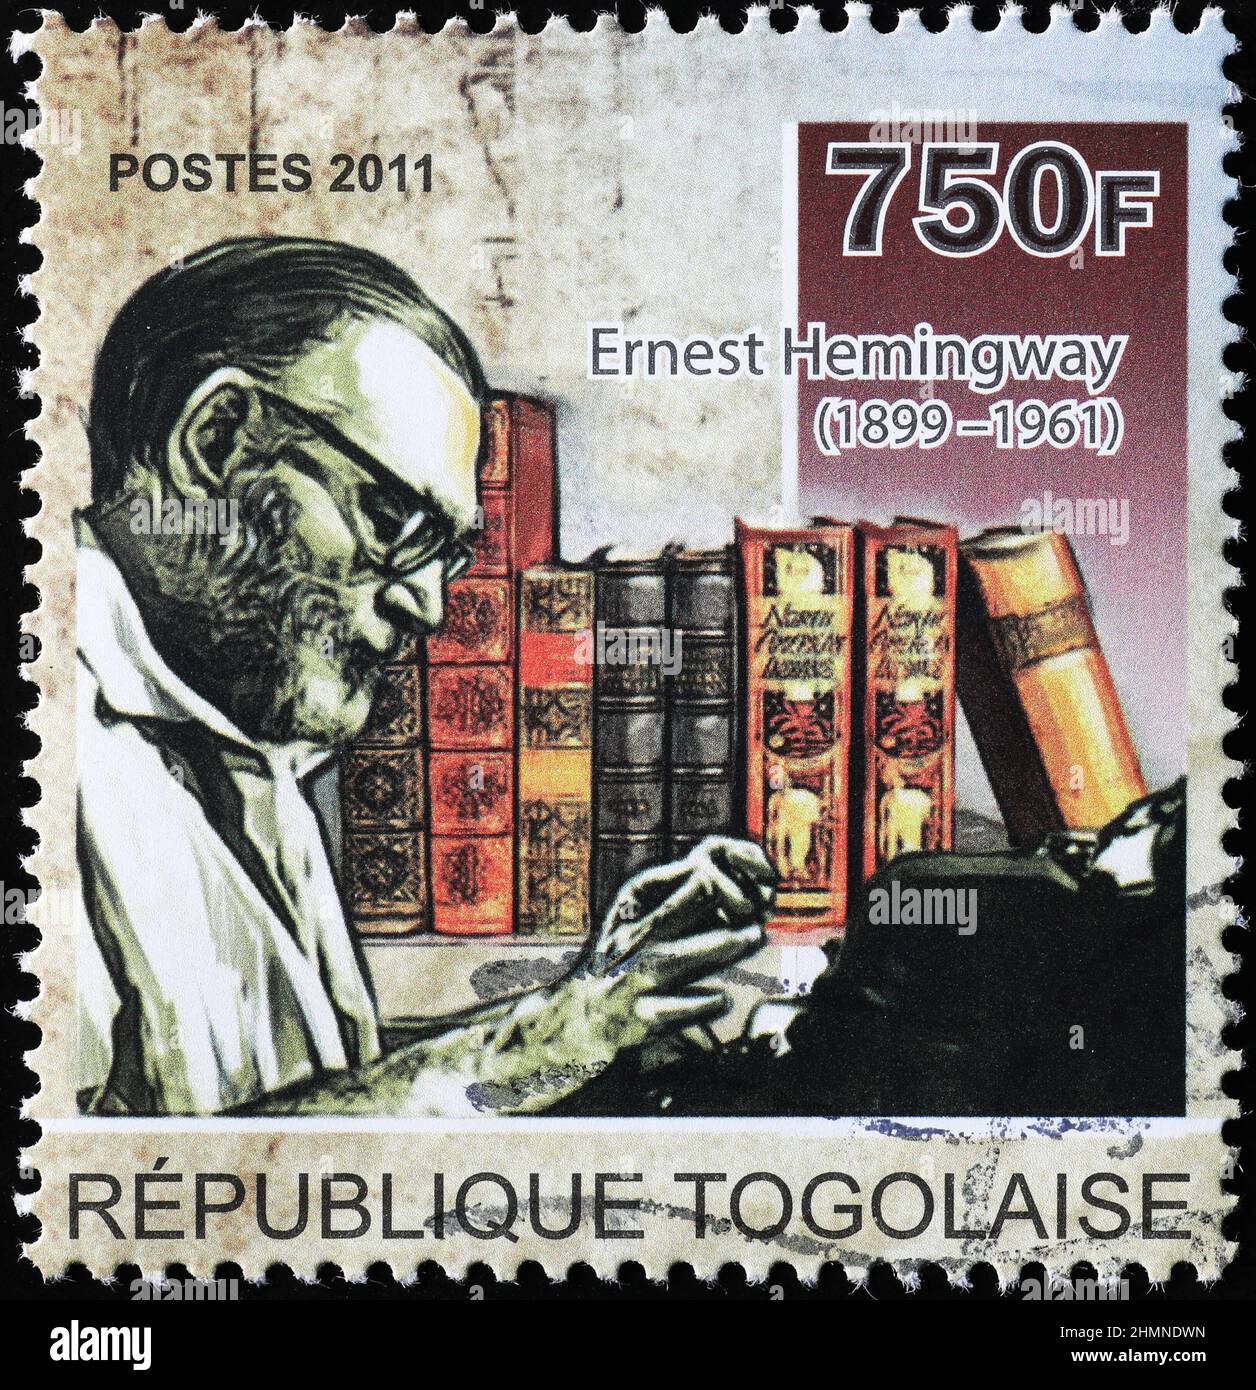 Ernest Hemingway at the typewriter on postage stamp Stock Photo